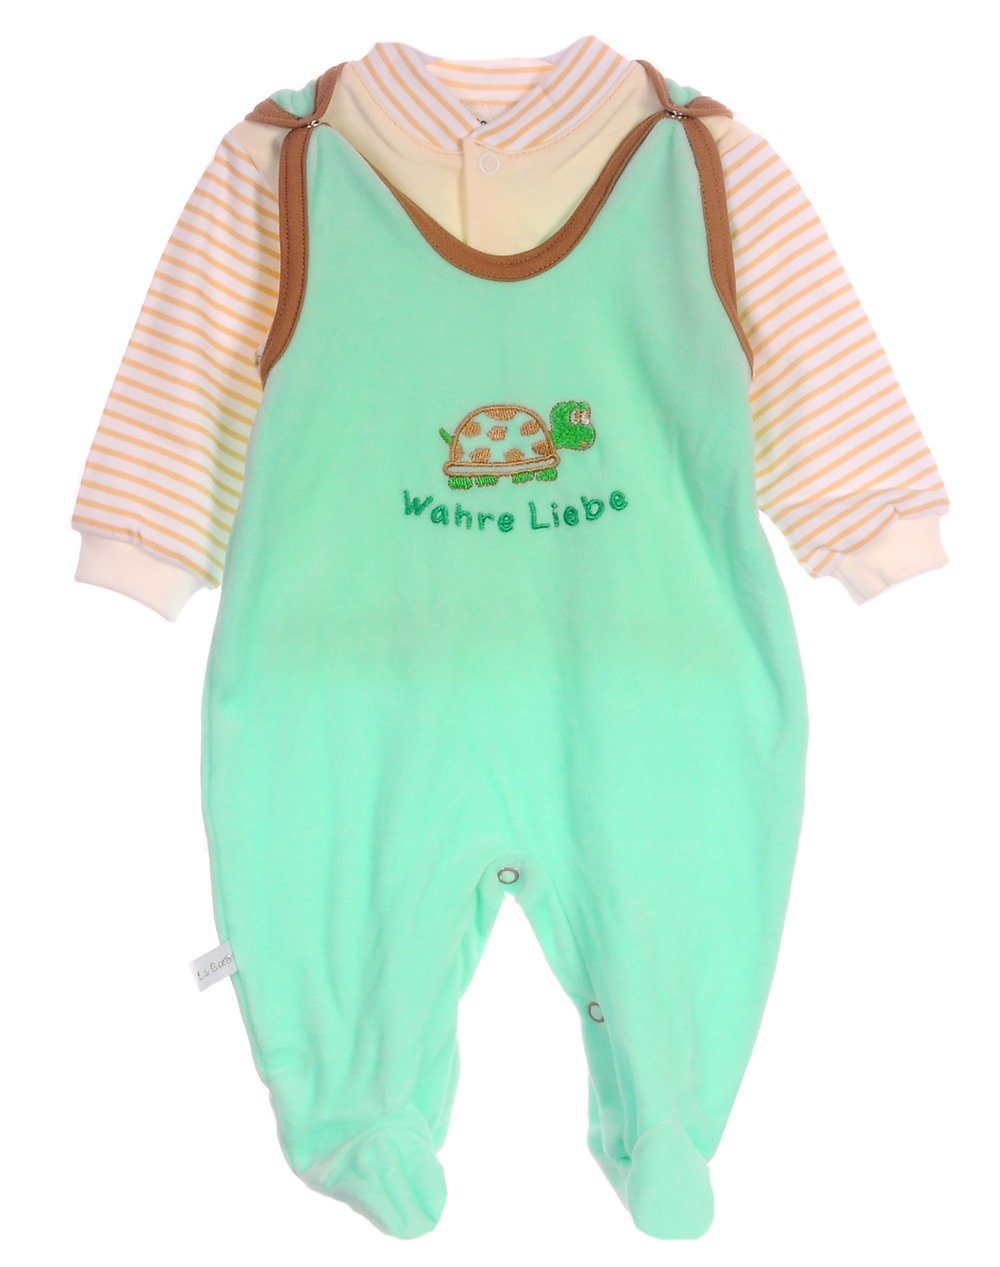 La Bortini Strampler Strampler und Shirt Baby Anzug 50 56 62 68 74